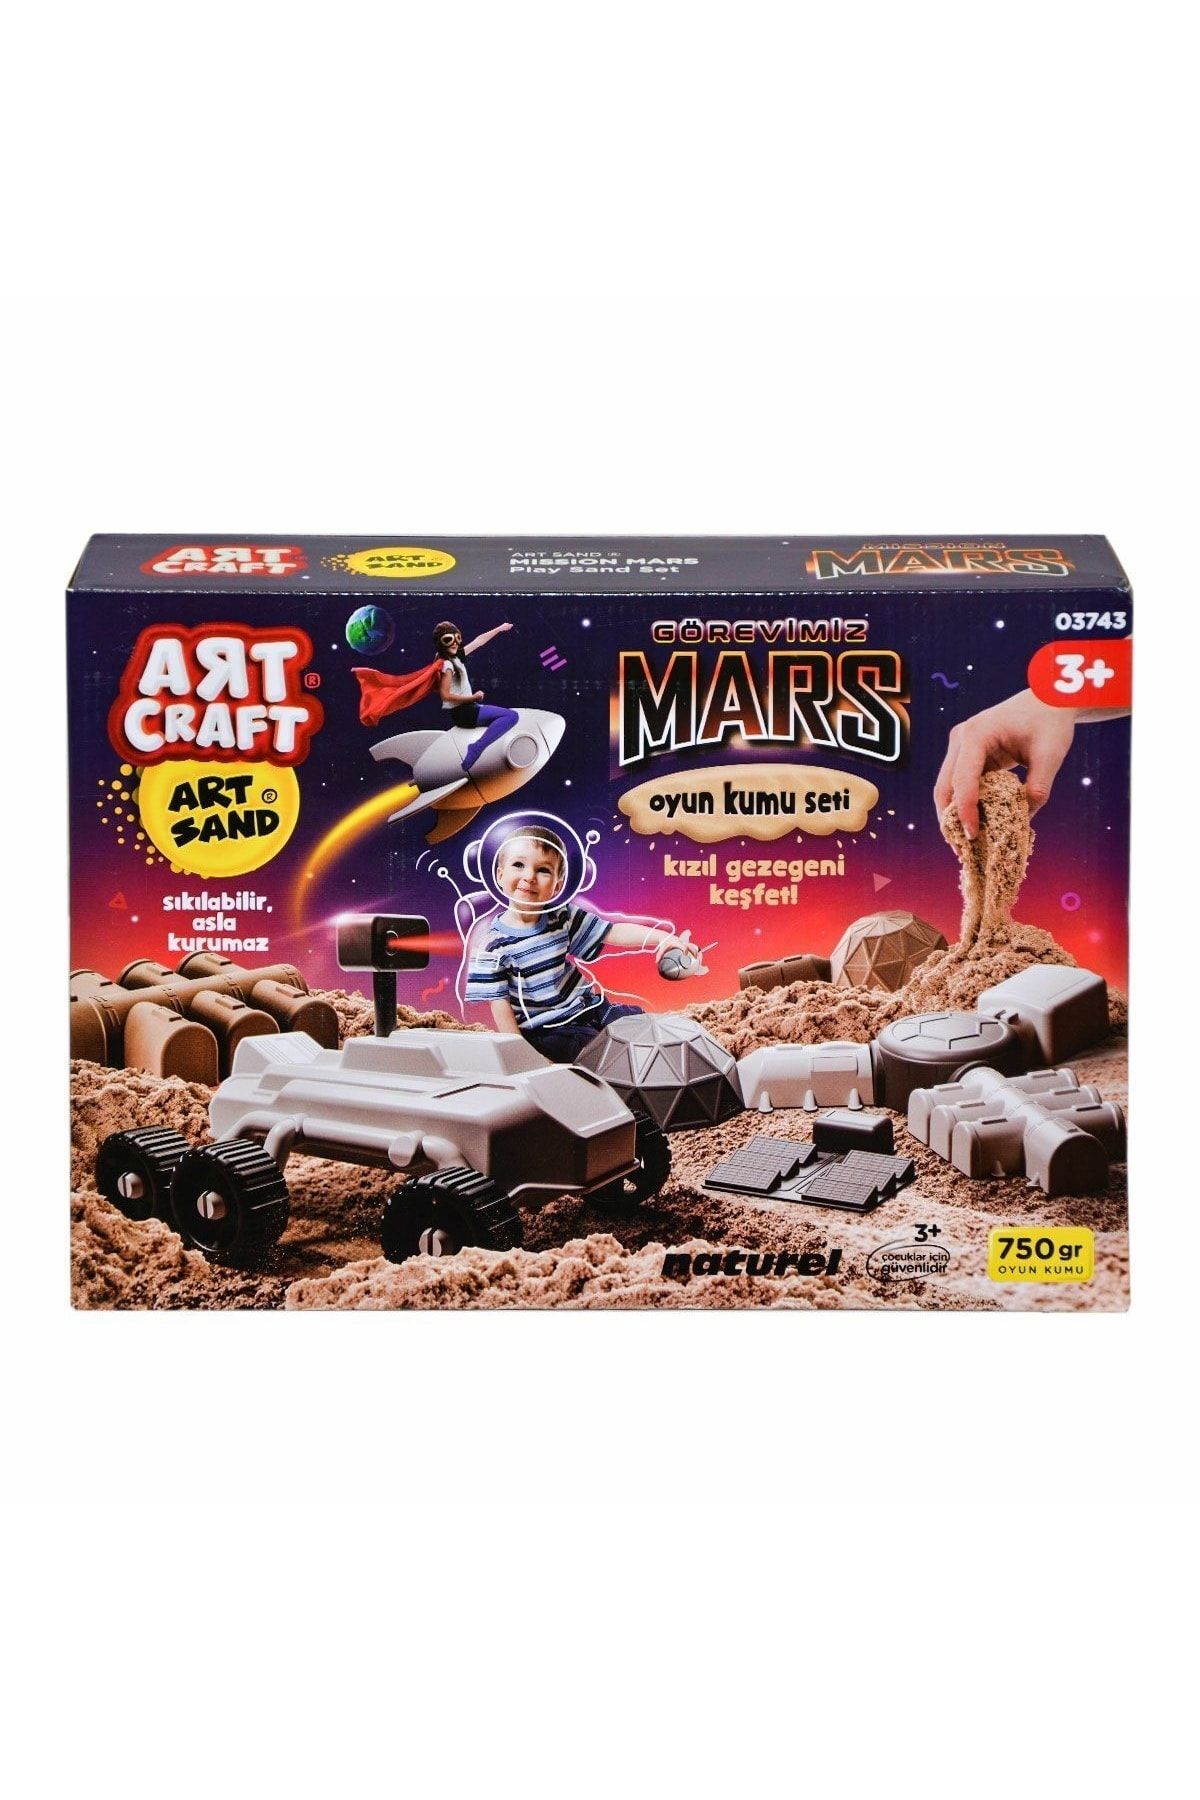 Fen Toys 03743 Art Craft Görevimiz Mars Kinetik Kum Oyun Seti 750 Gr.